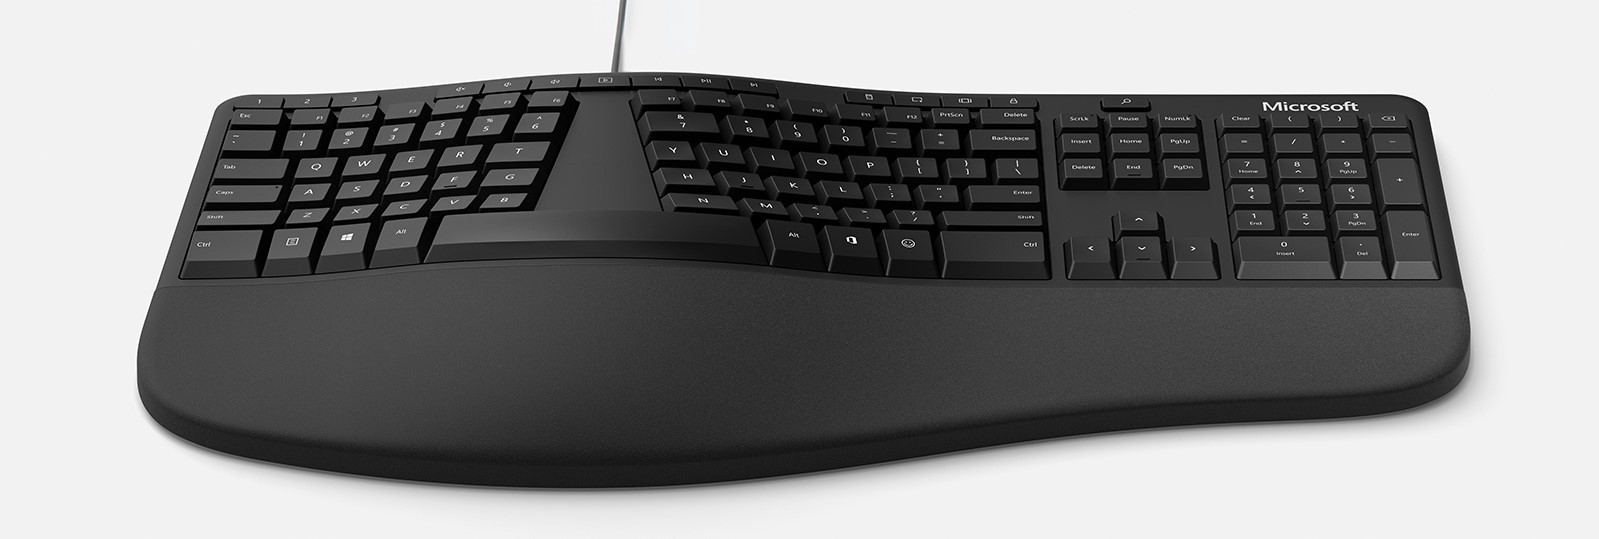 microsoft ergonomic keyboard review